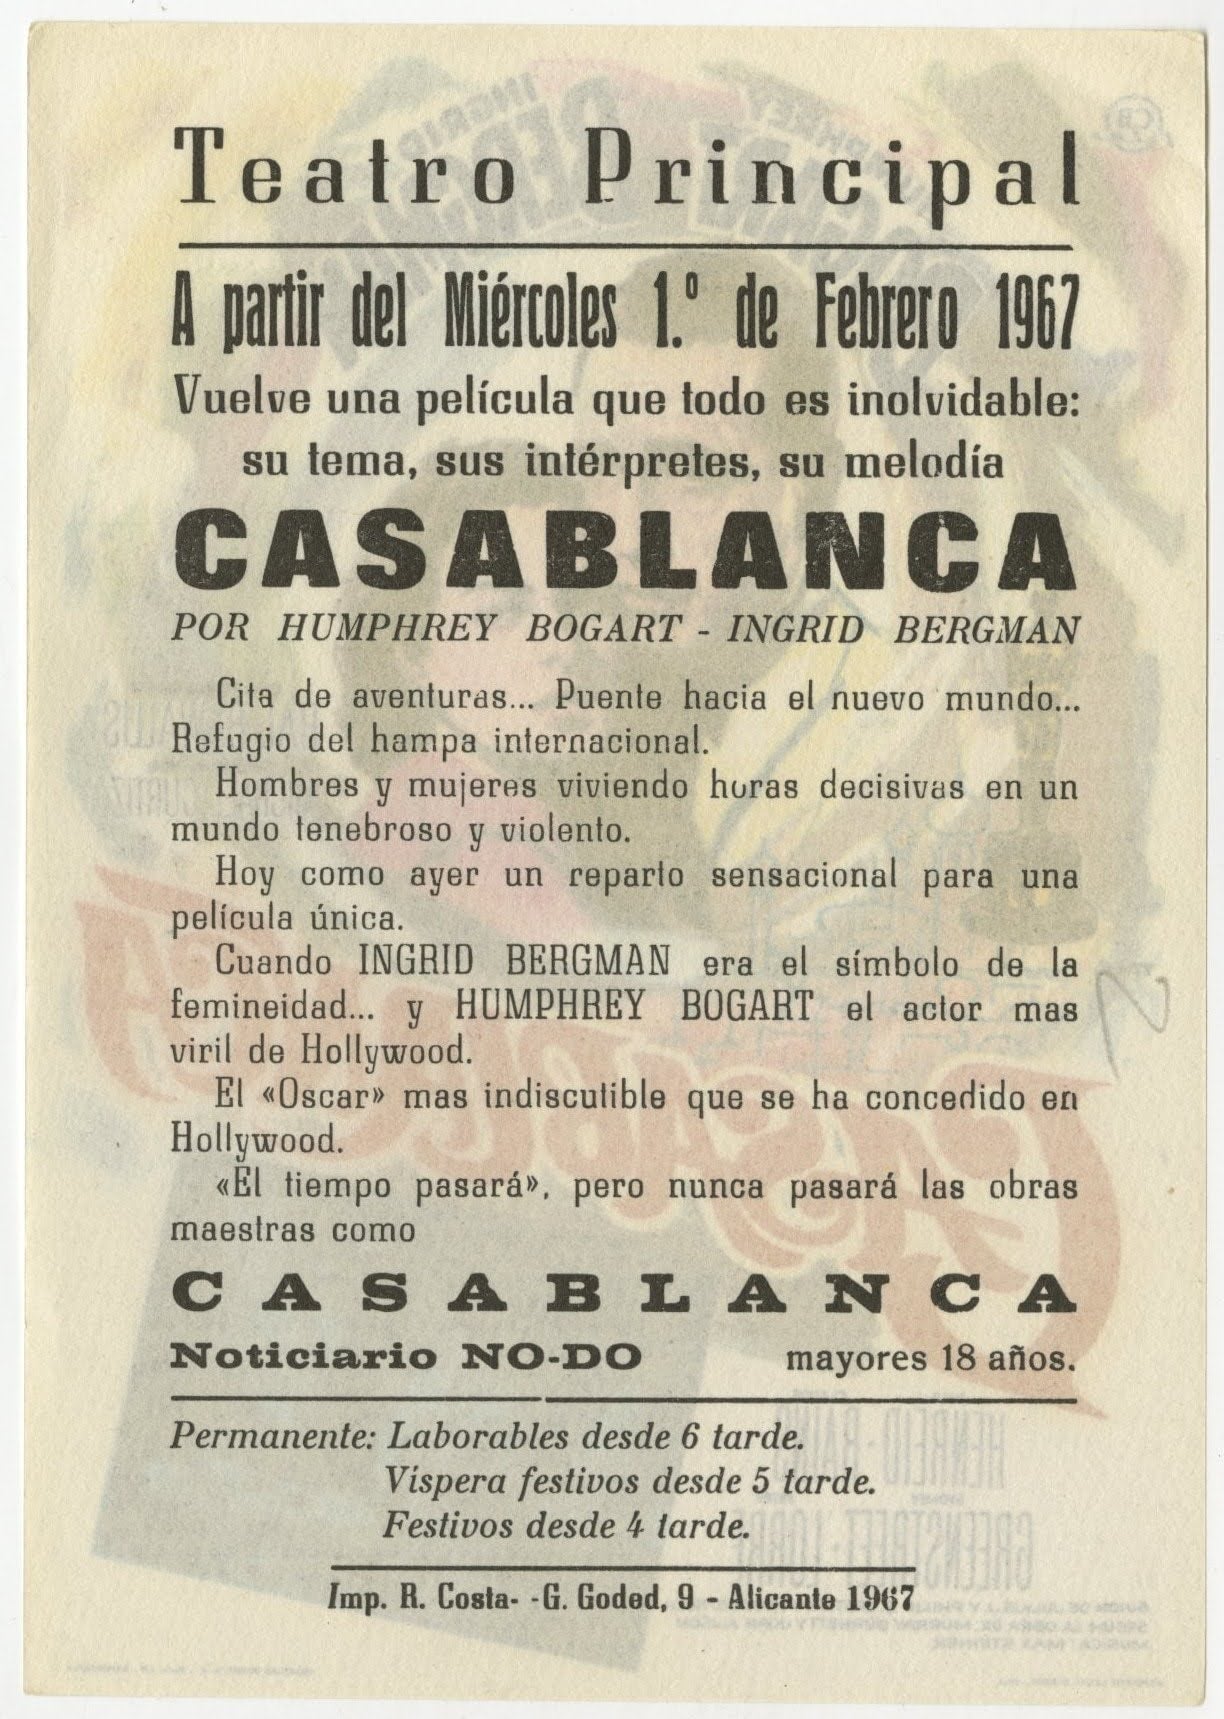 Casablanca Spanish Herald (R 1965) - posterpalace.com